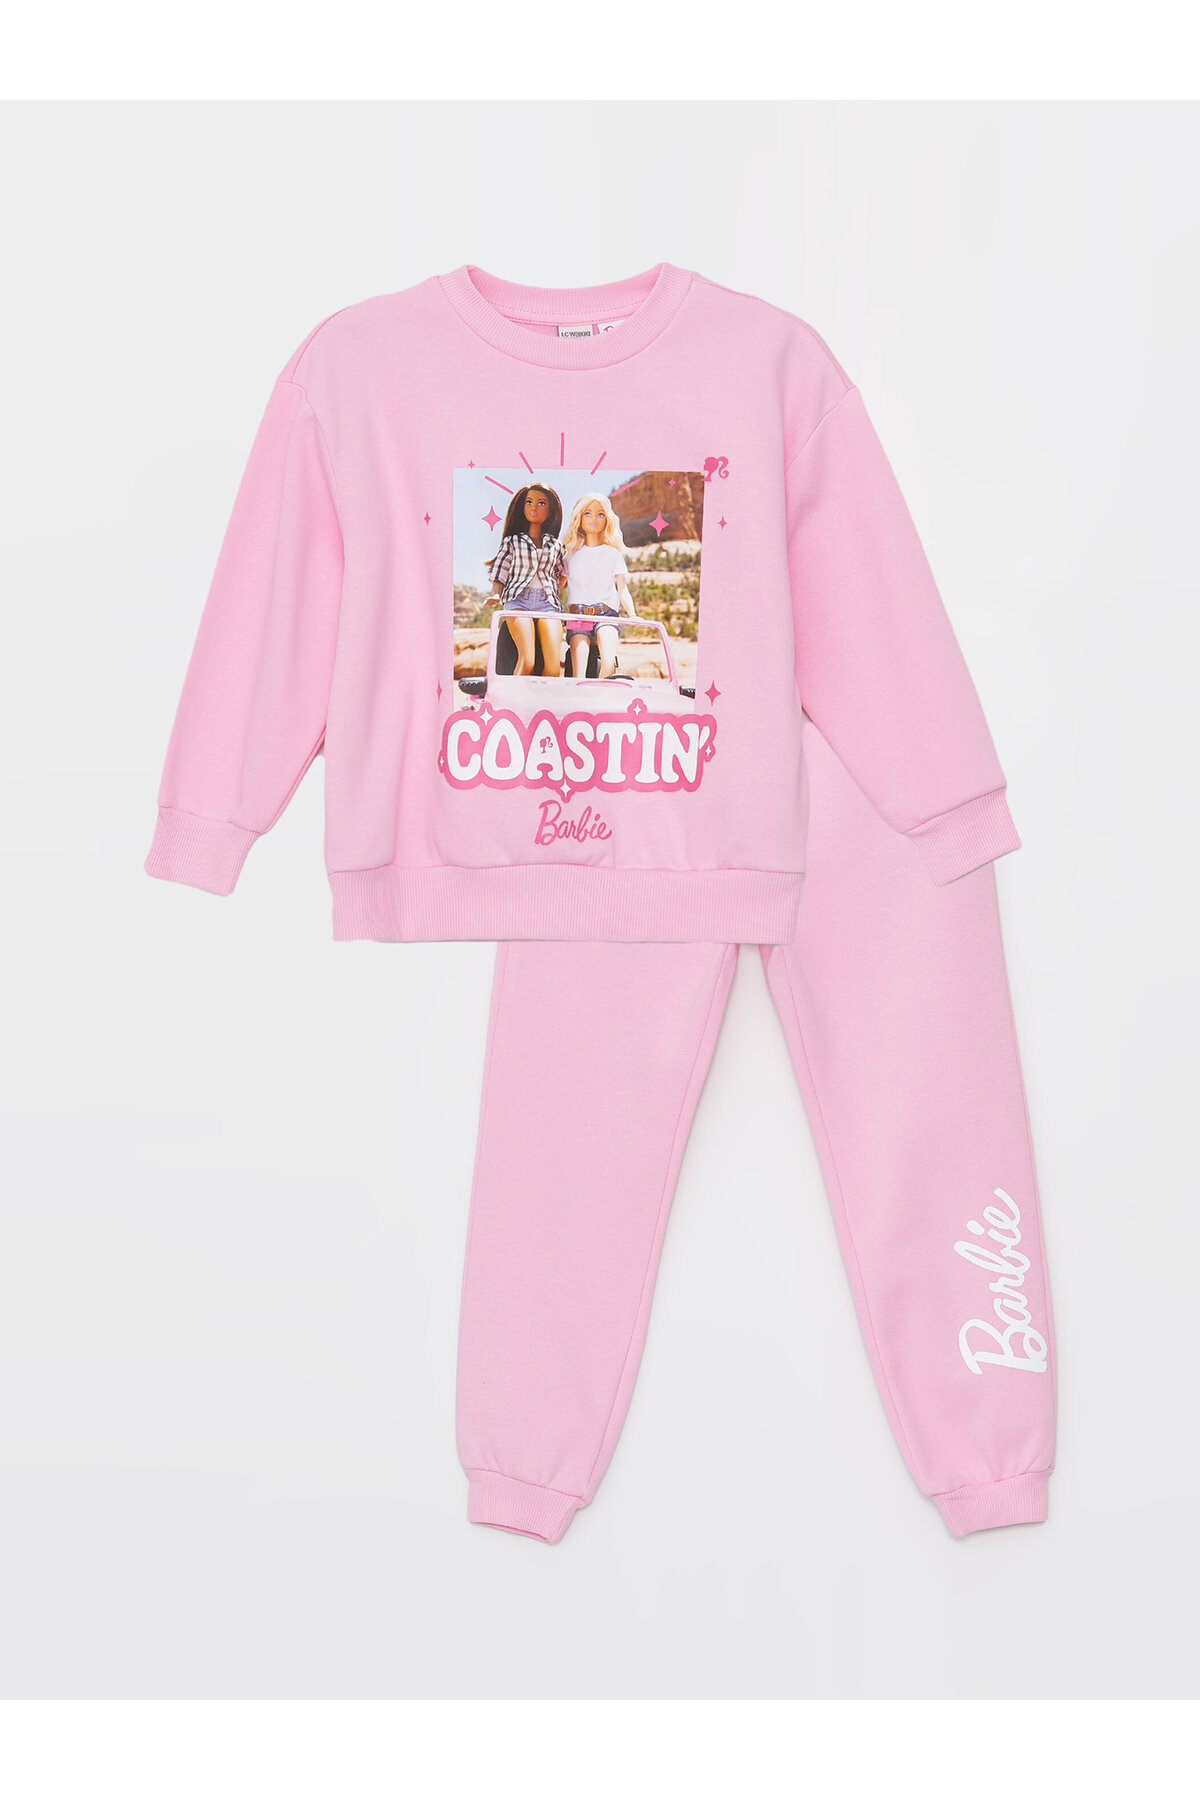 LC Waikiki Crew Neck Barbie Printed Long Sleeve Girls Sweatshirt and Sweatpants